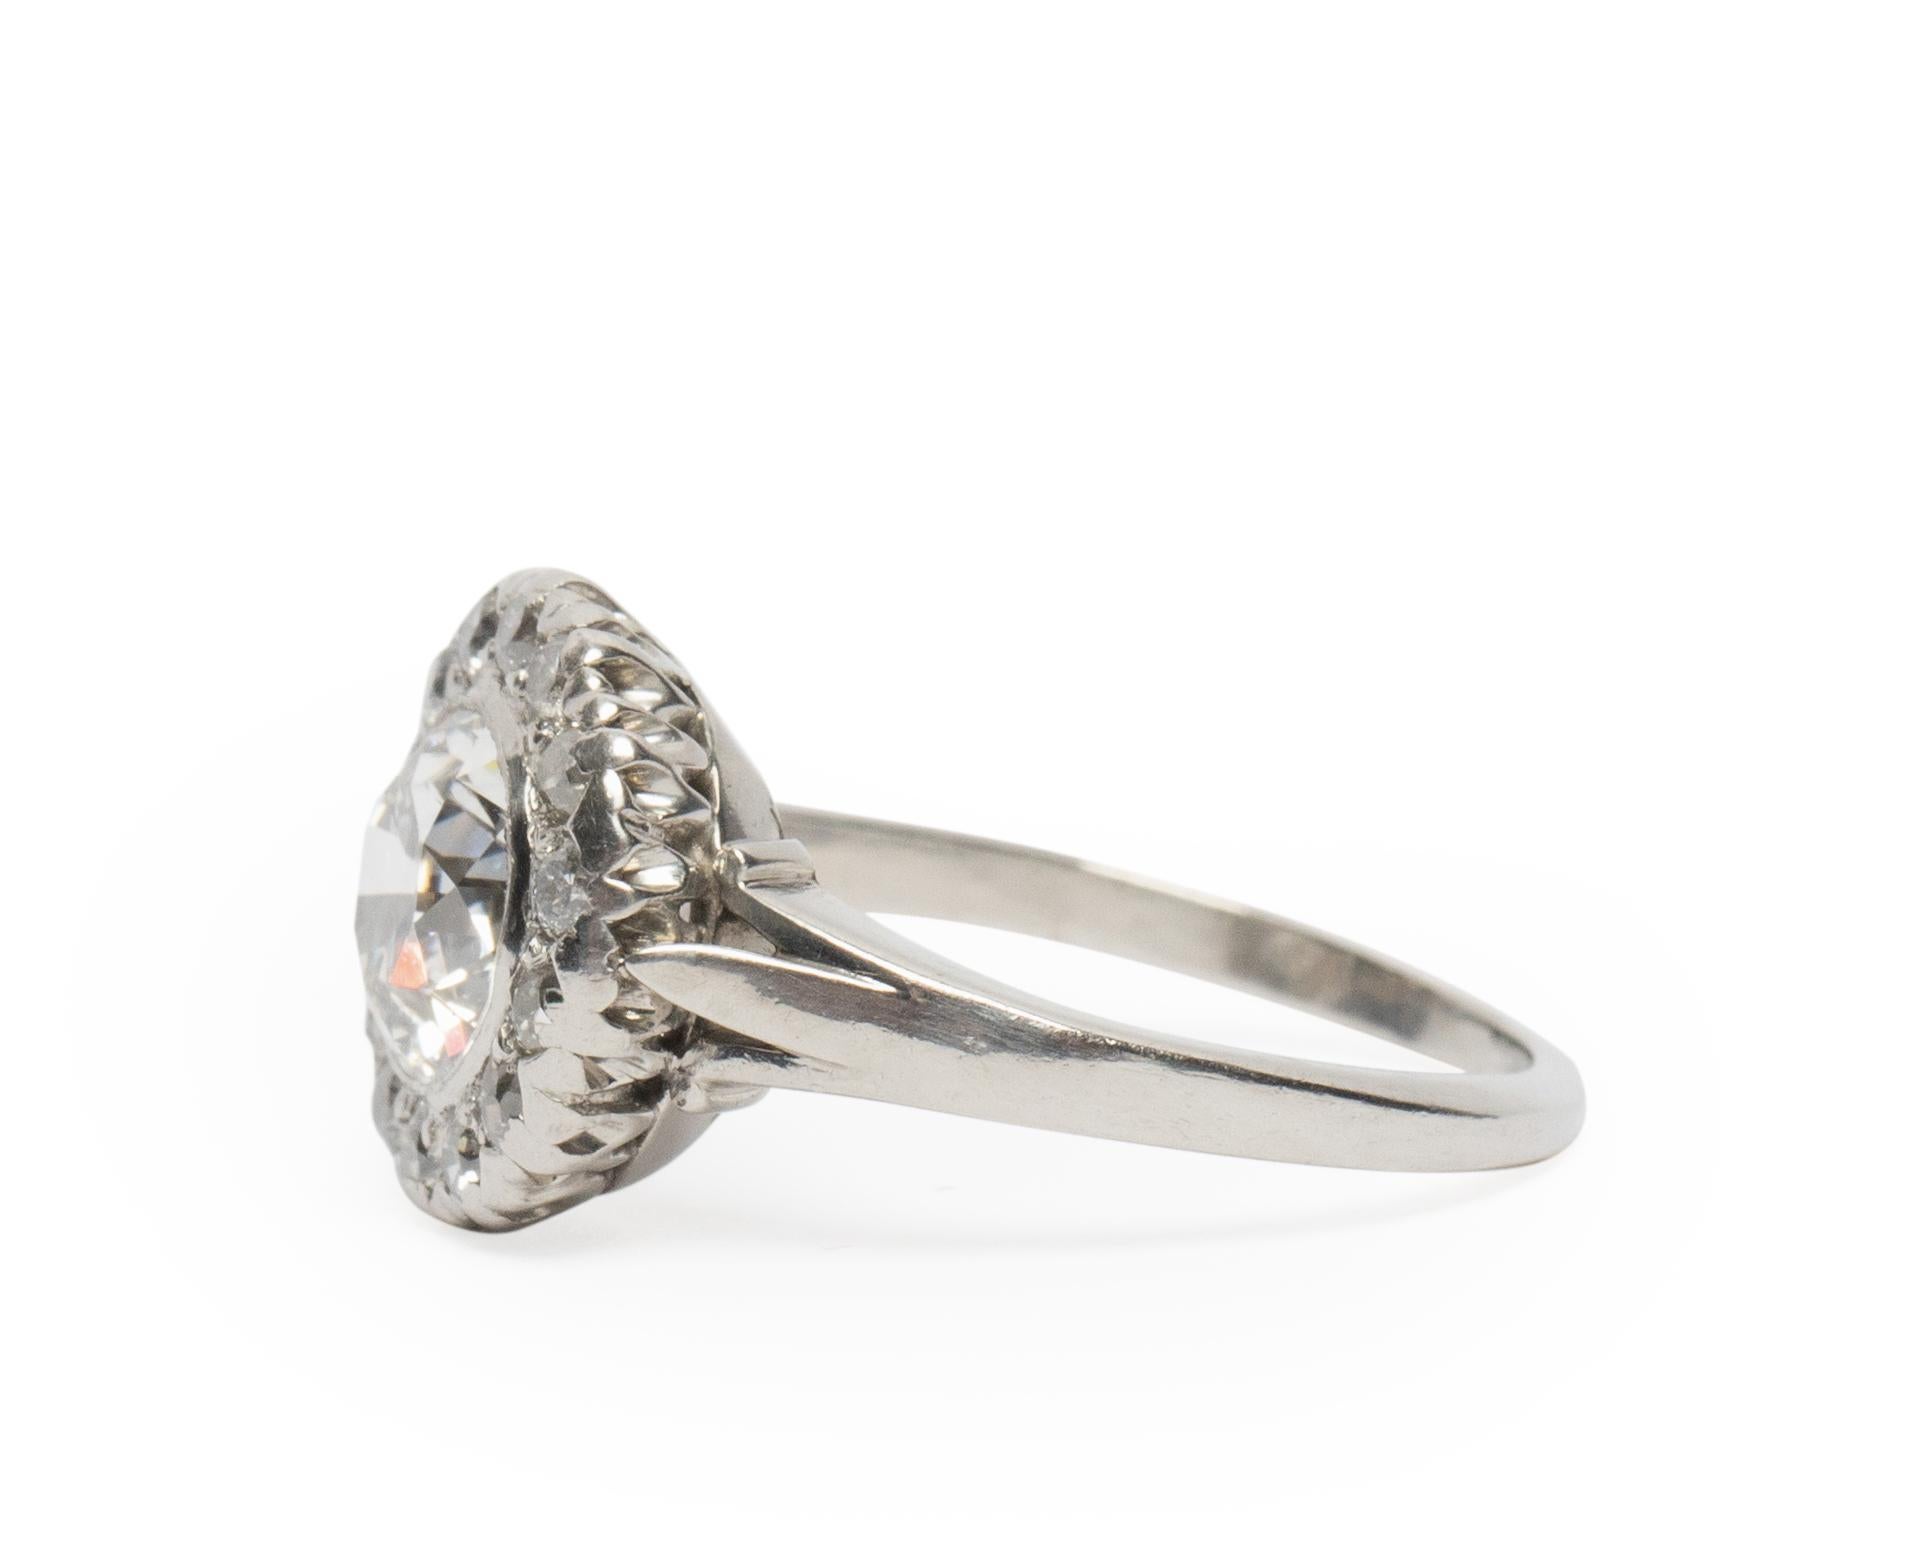 1.21 carat diamond ring